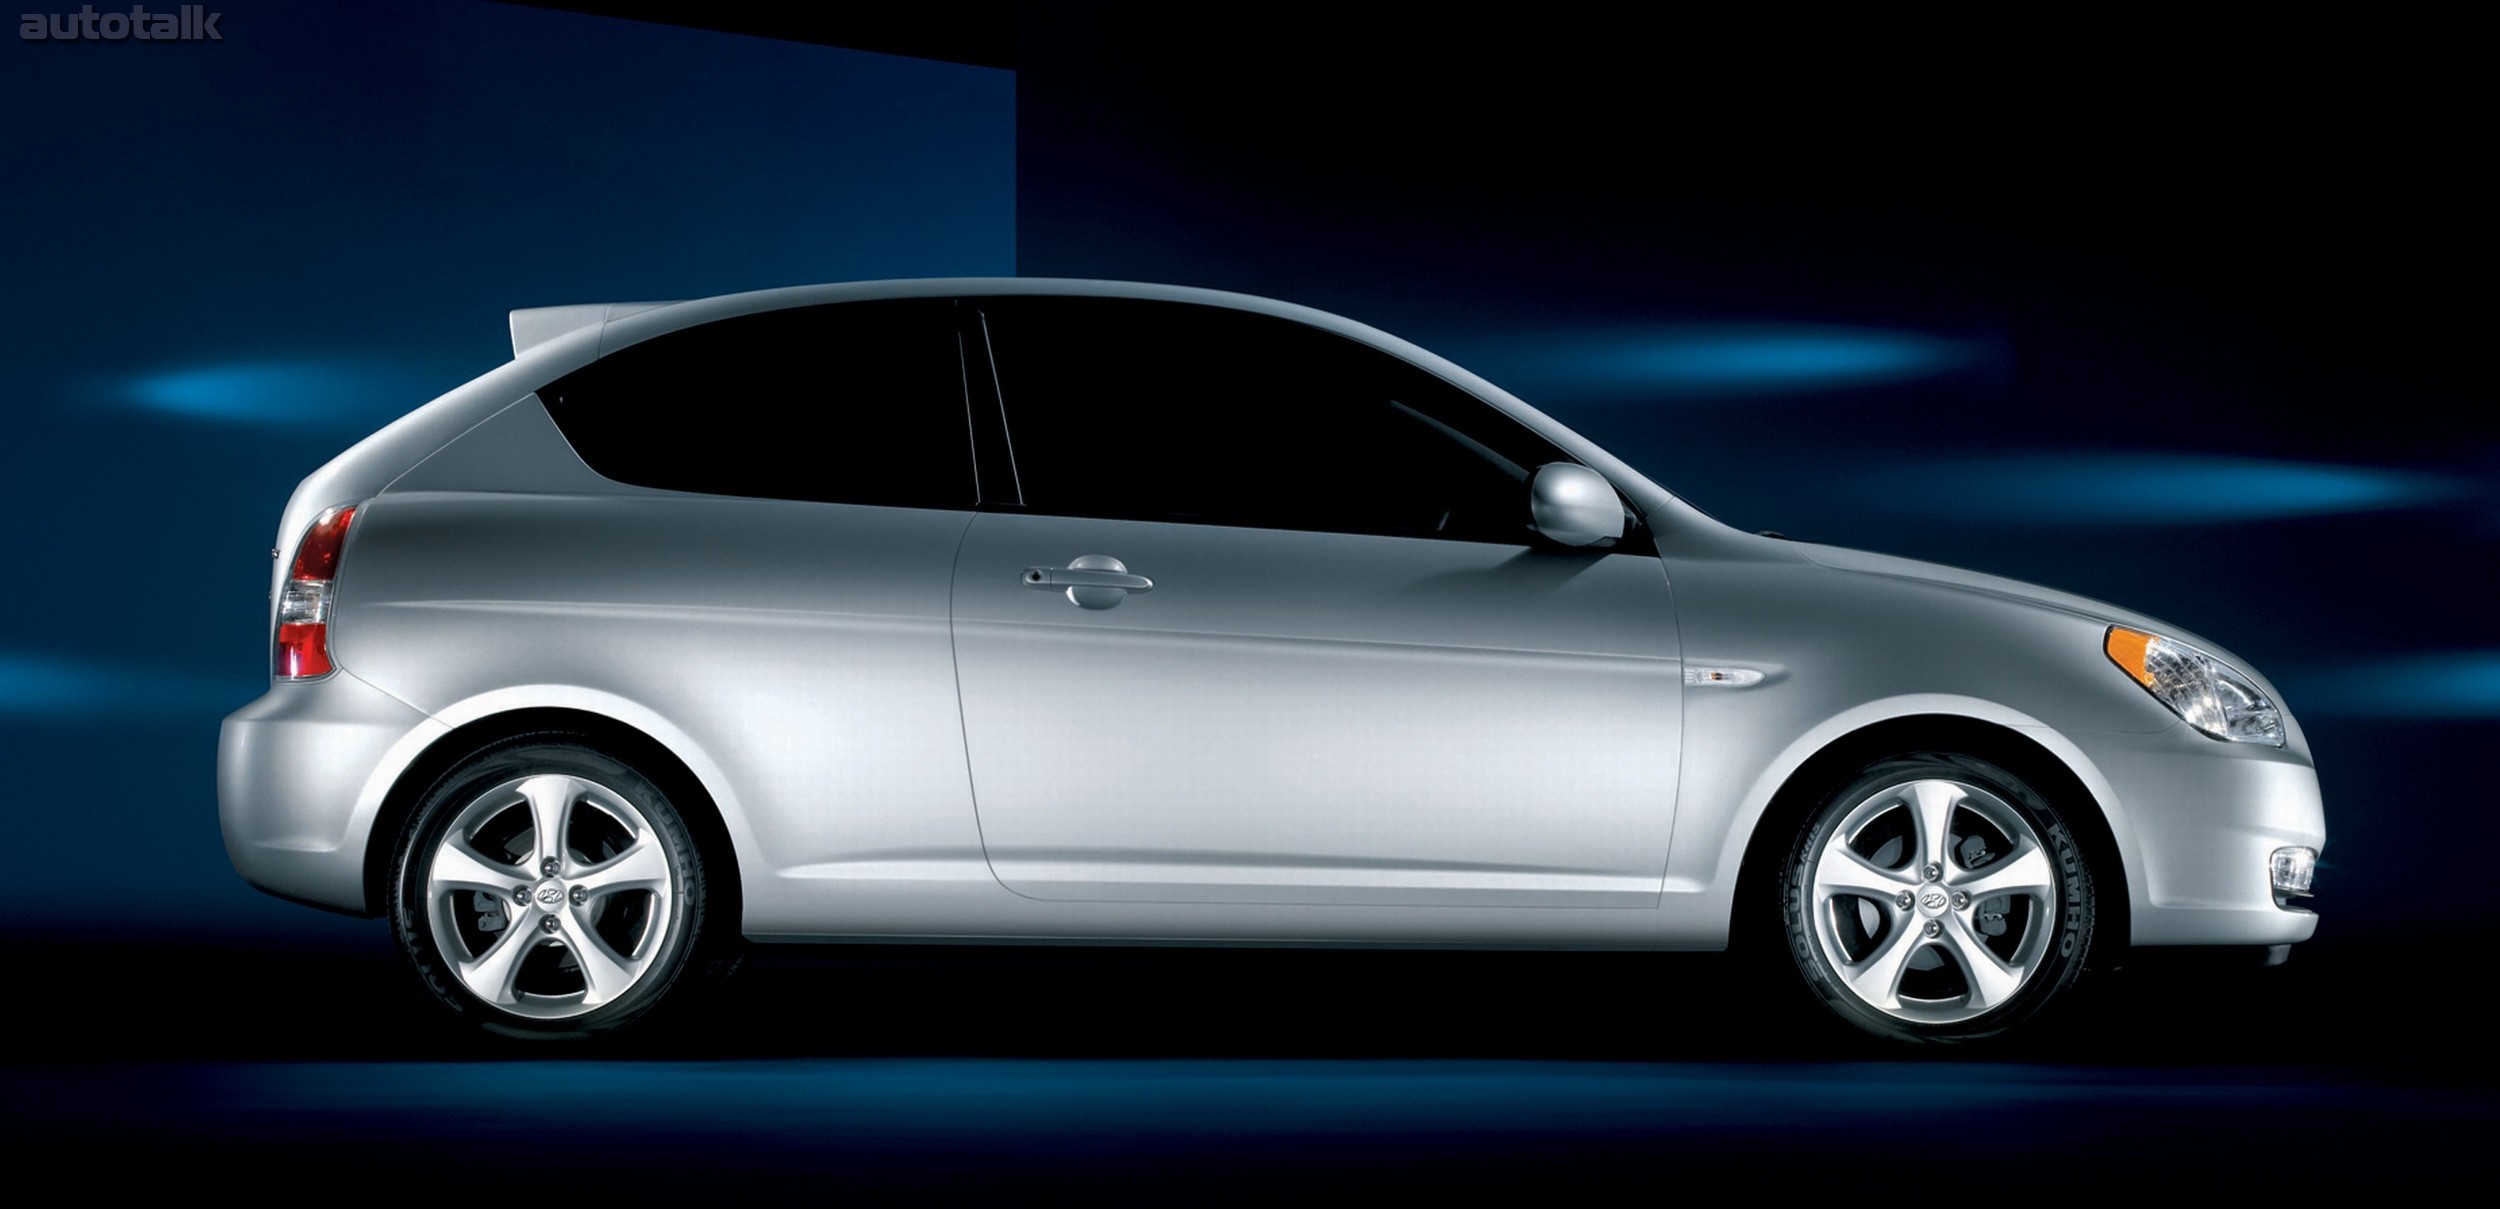 2011 Hyundai Accent